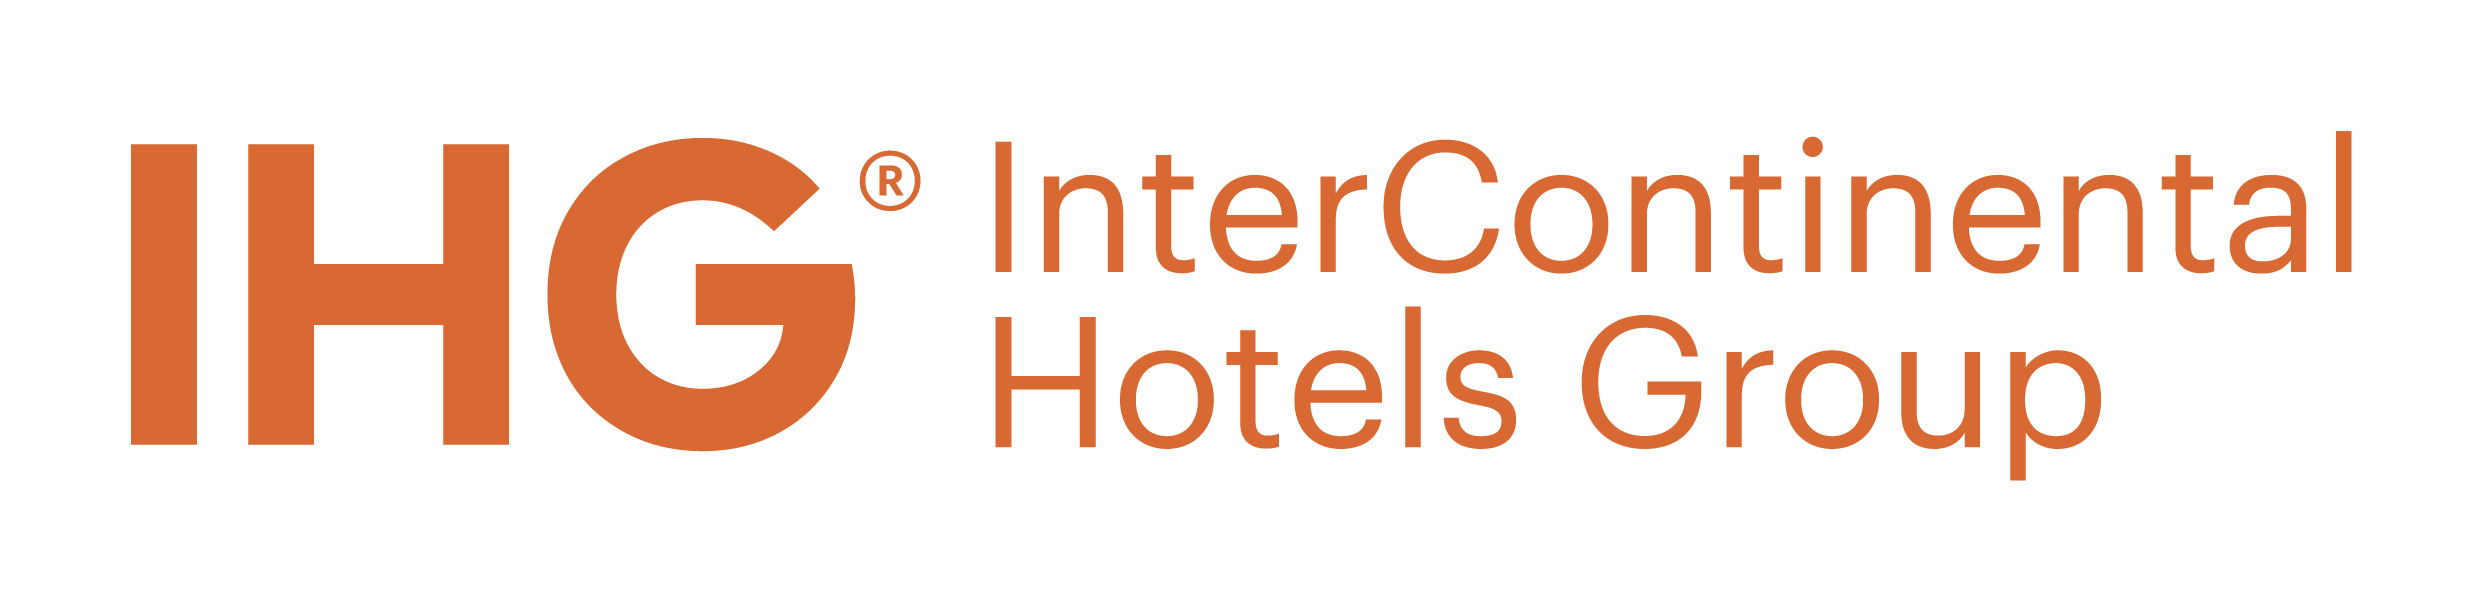 InterContinental Logo - Flying Blue - InterContinental Hotels Group